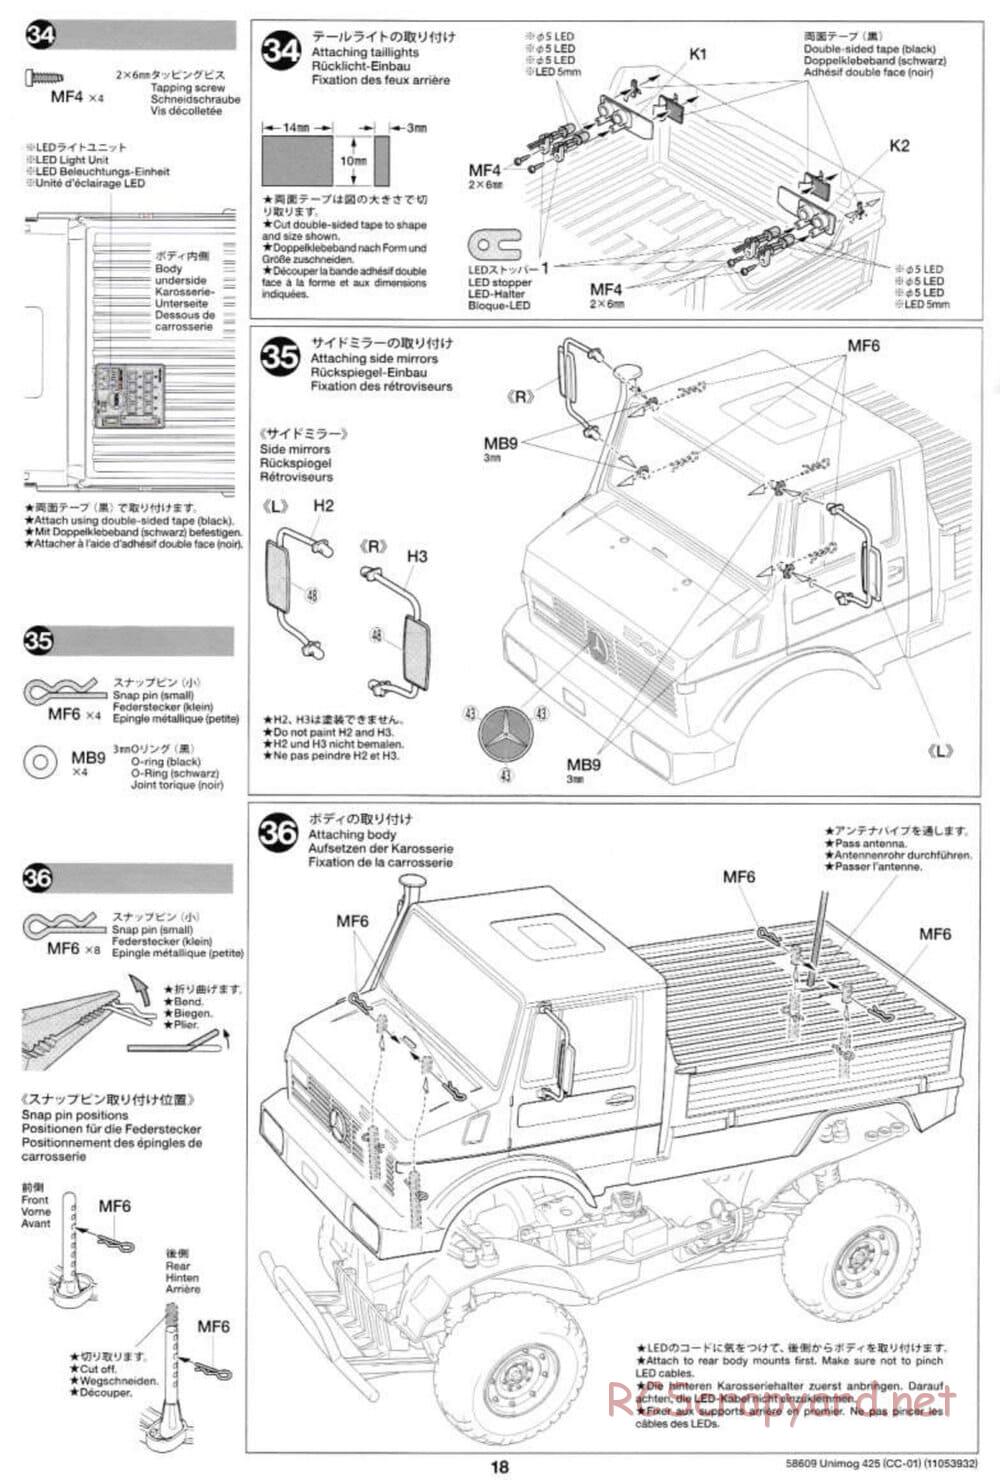 Tamiya - Mercedes-Benz Unimog 425 - CC-01 Chassis - Manual - Page 18